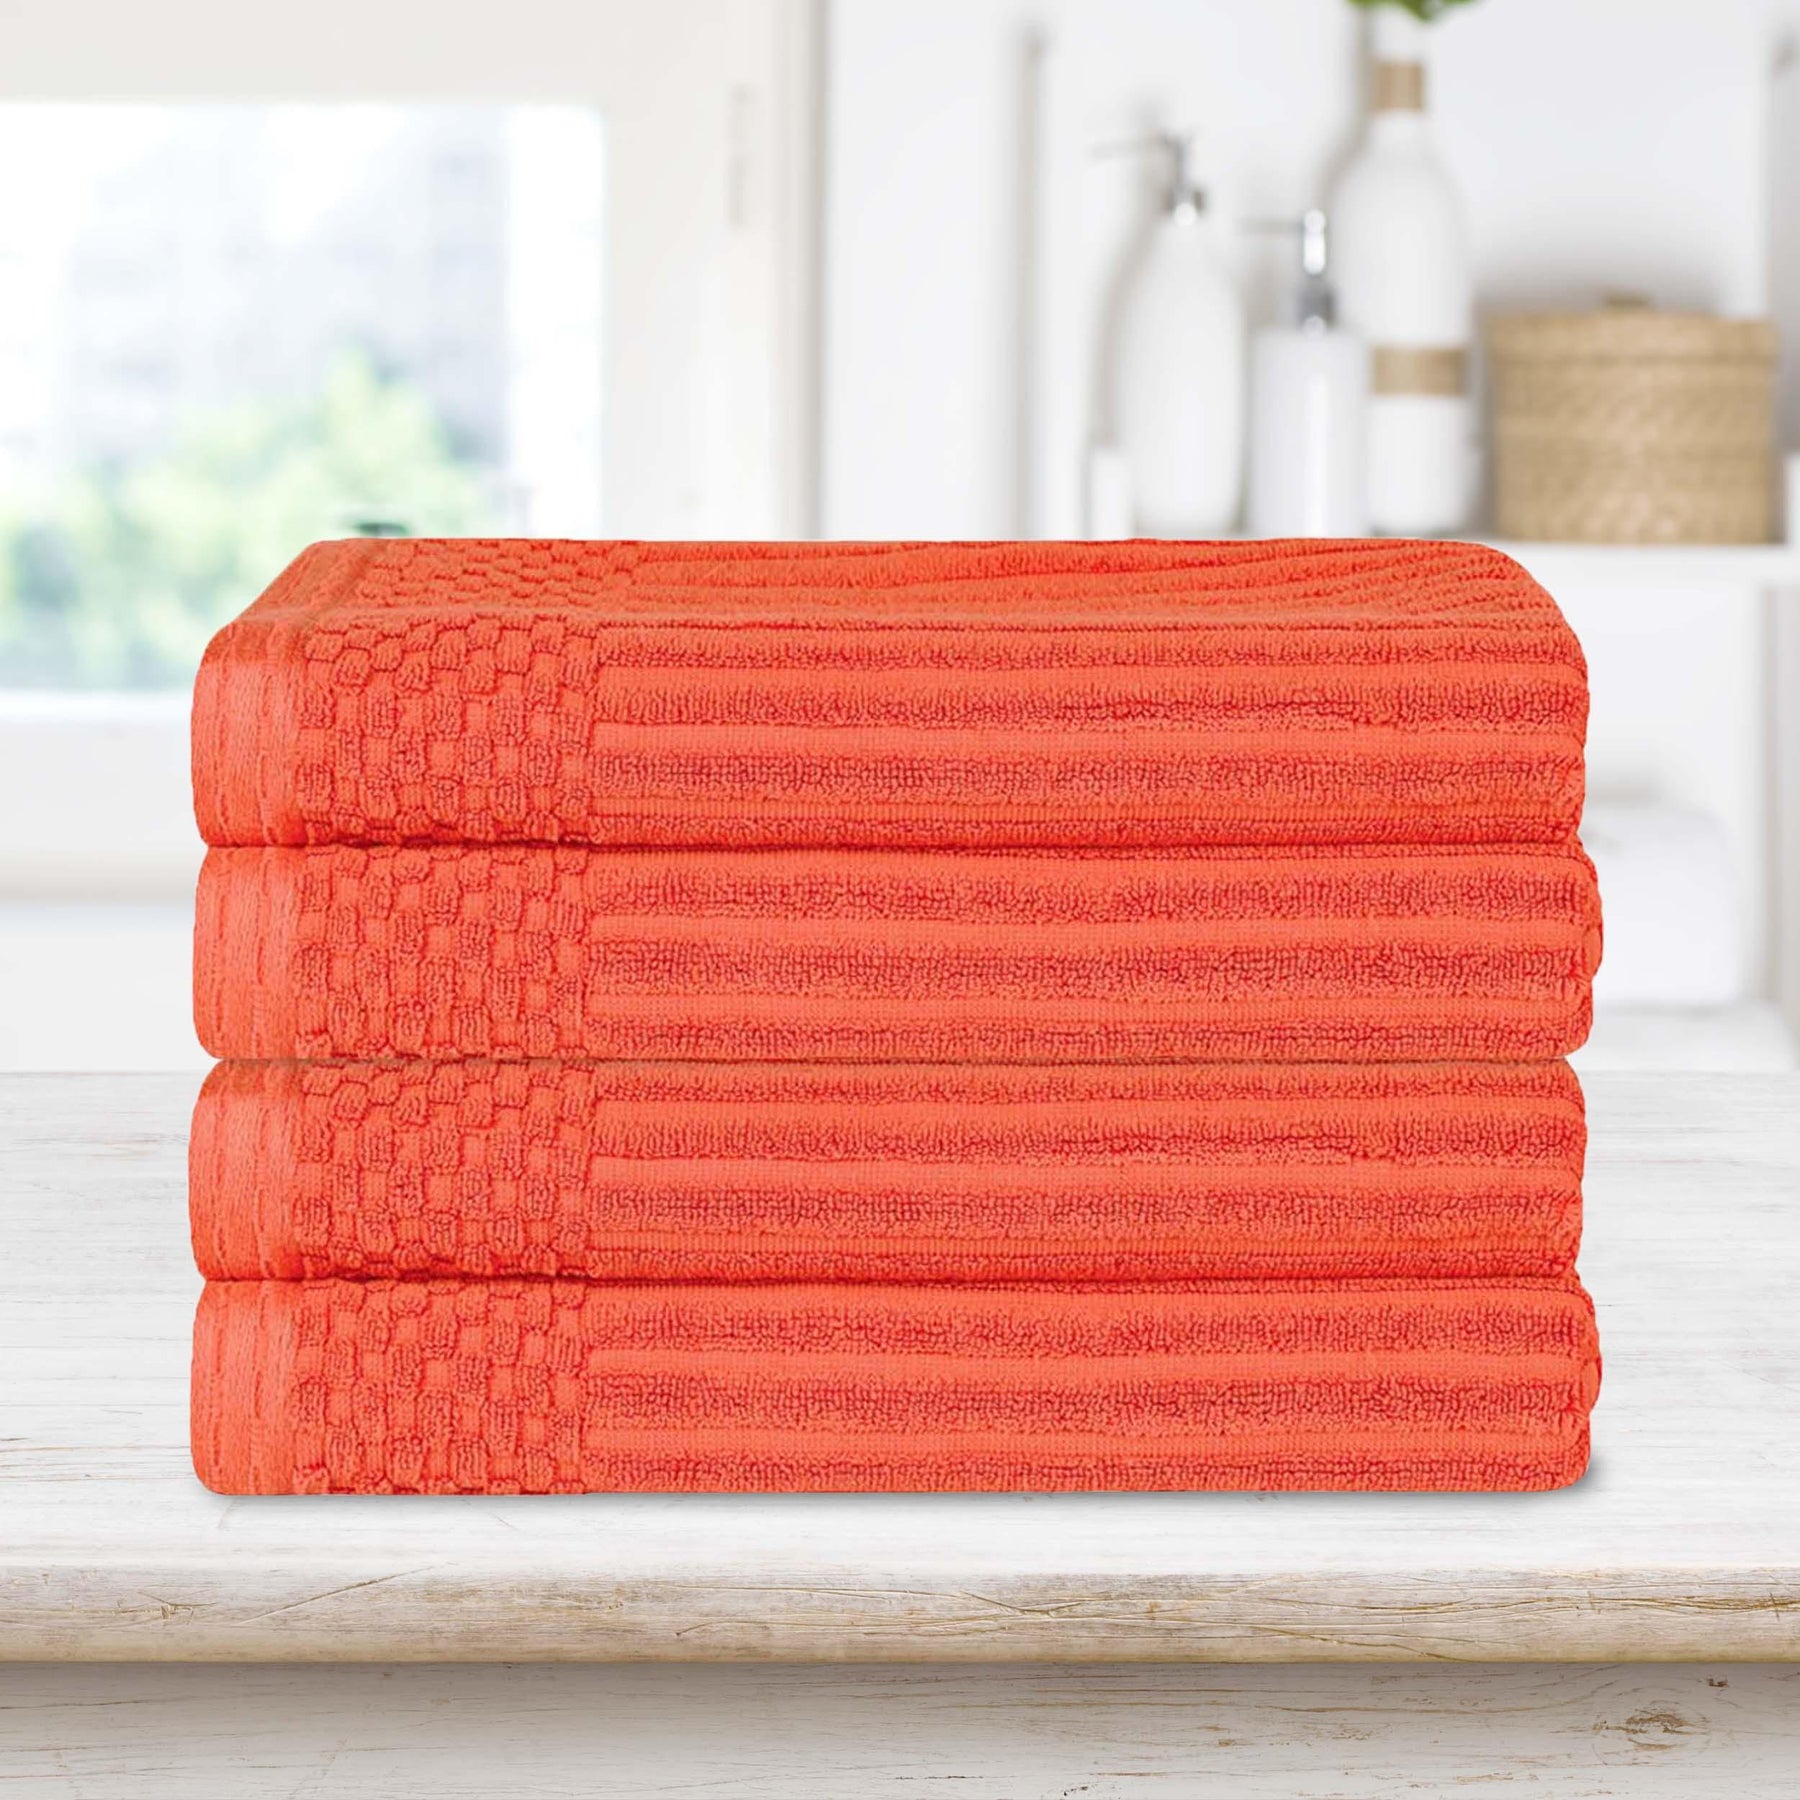  Superior Soho Ribbed Textured Cotton Ultra-Absorbent Bath Sheet & Bath Towel Set - Coral